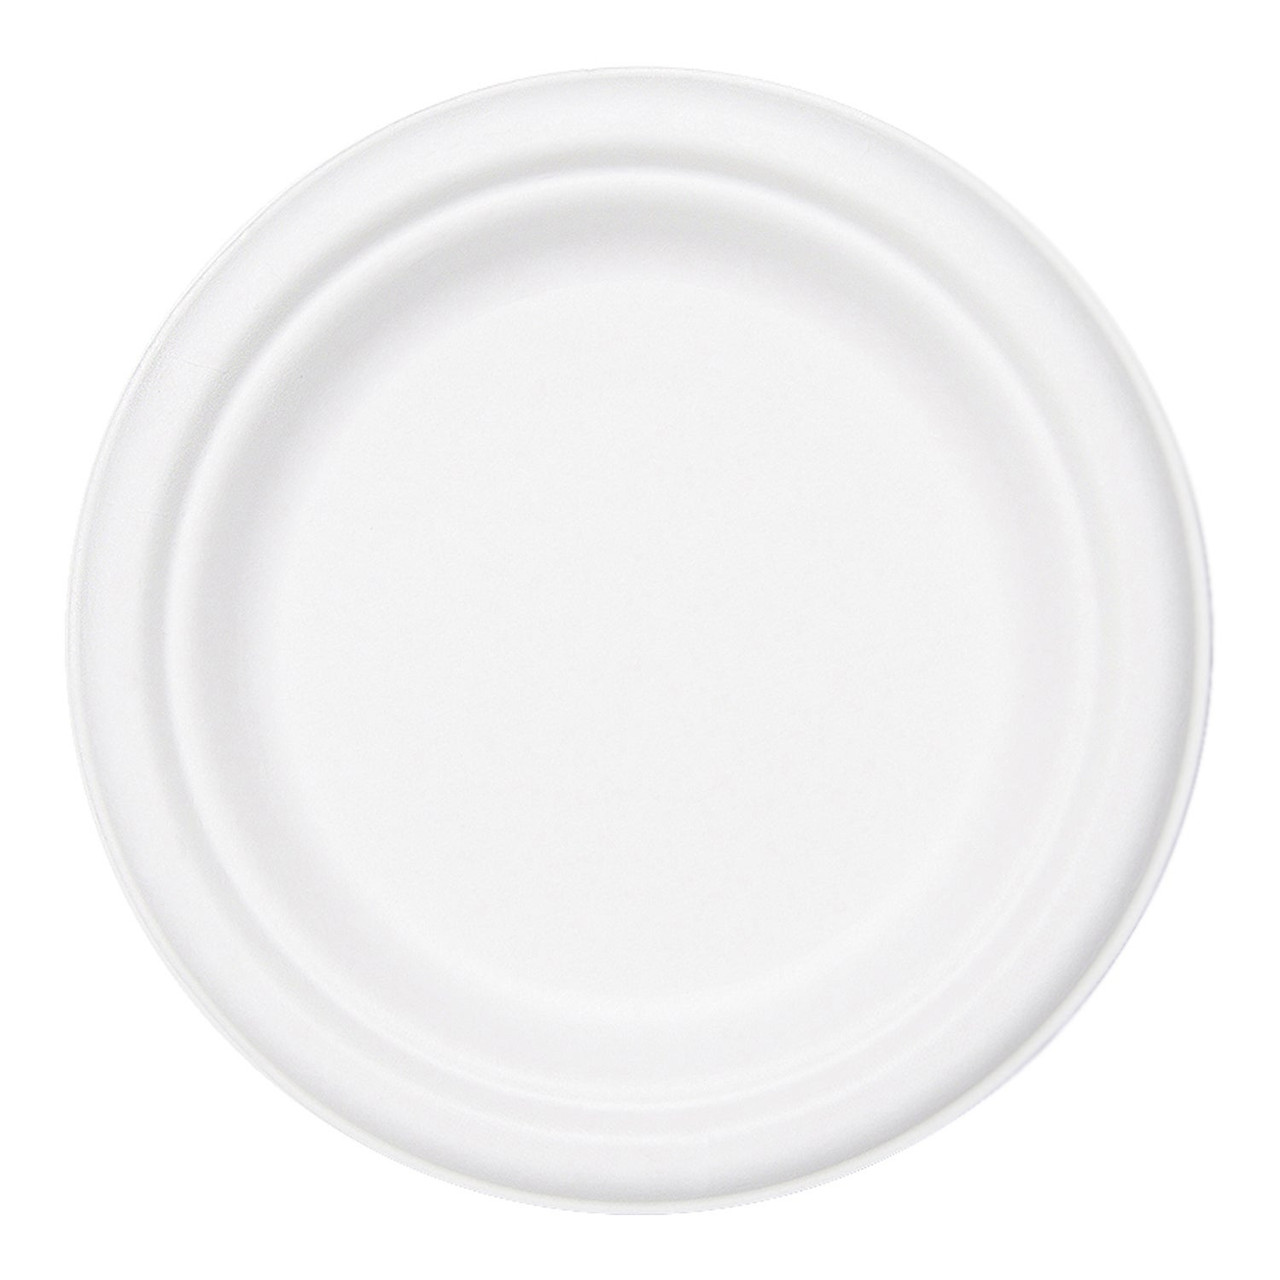 Gordon Choice 9In White Paper Plates, Microwave and Freezer Safe, Bagasse, Ecology Friendly | 125UN/Unit, 4 Units/Case